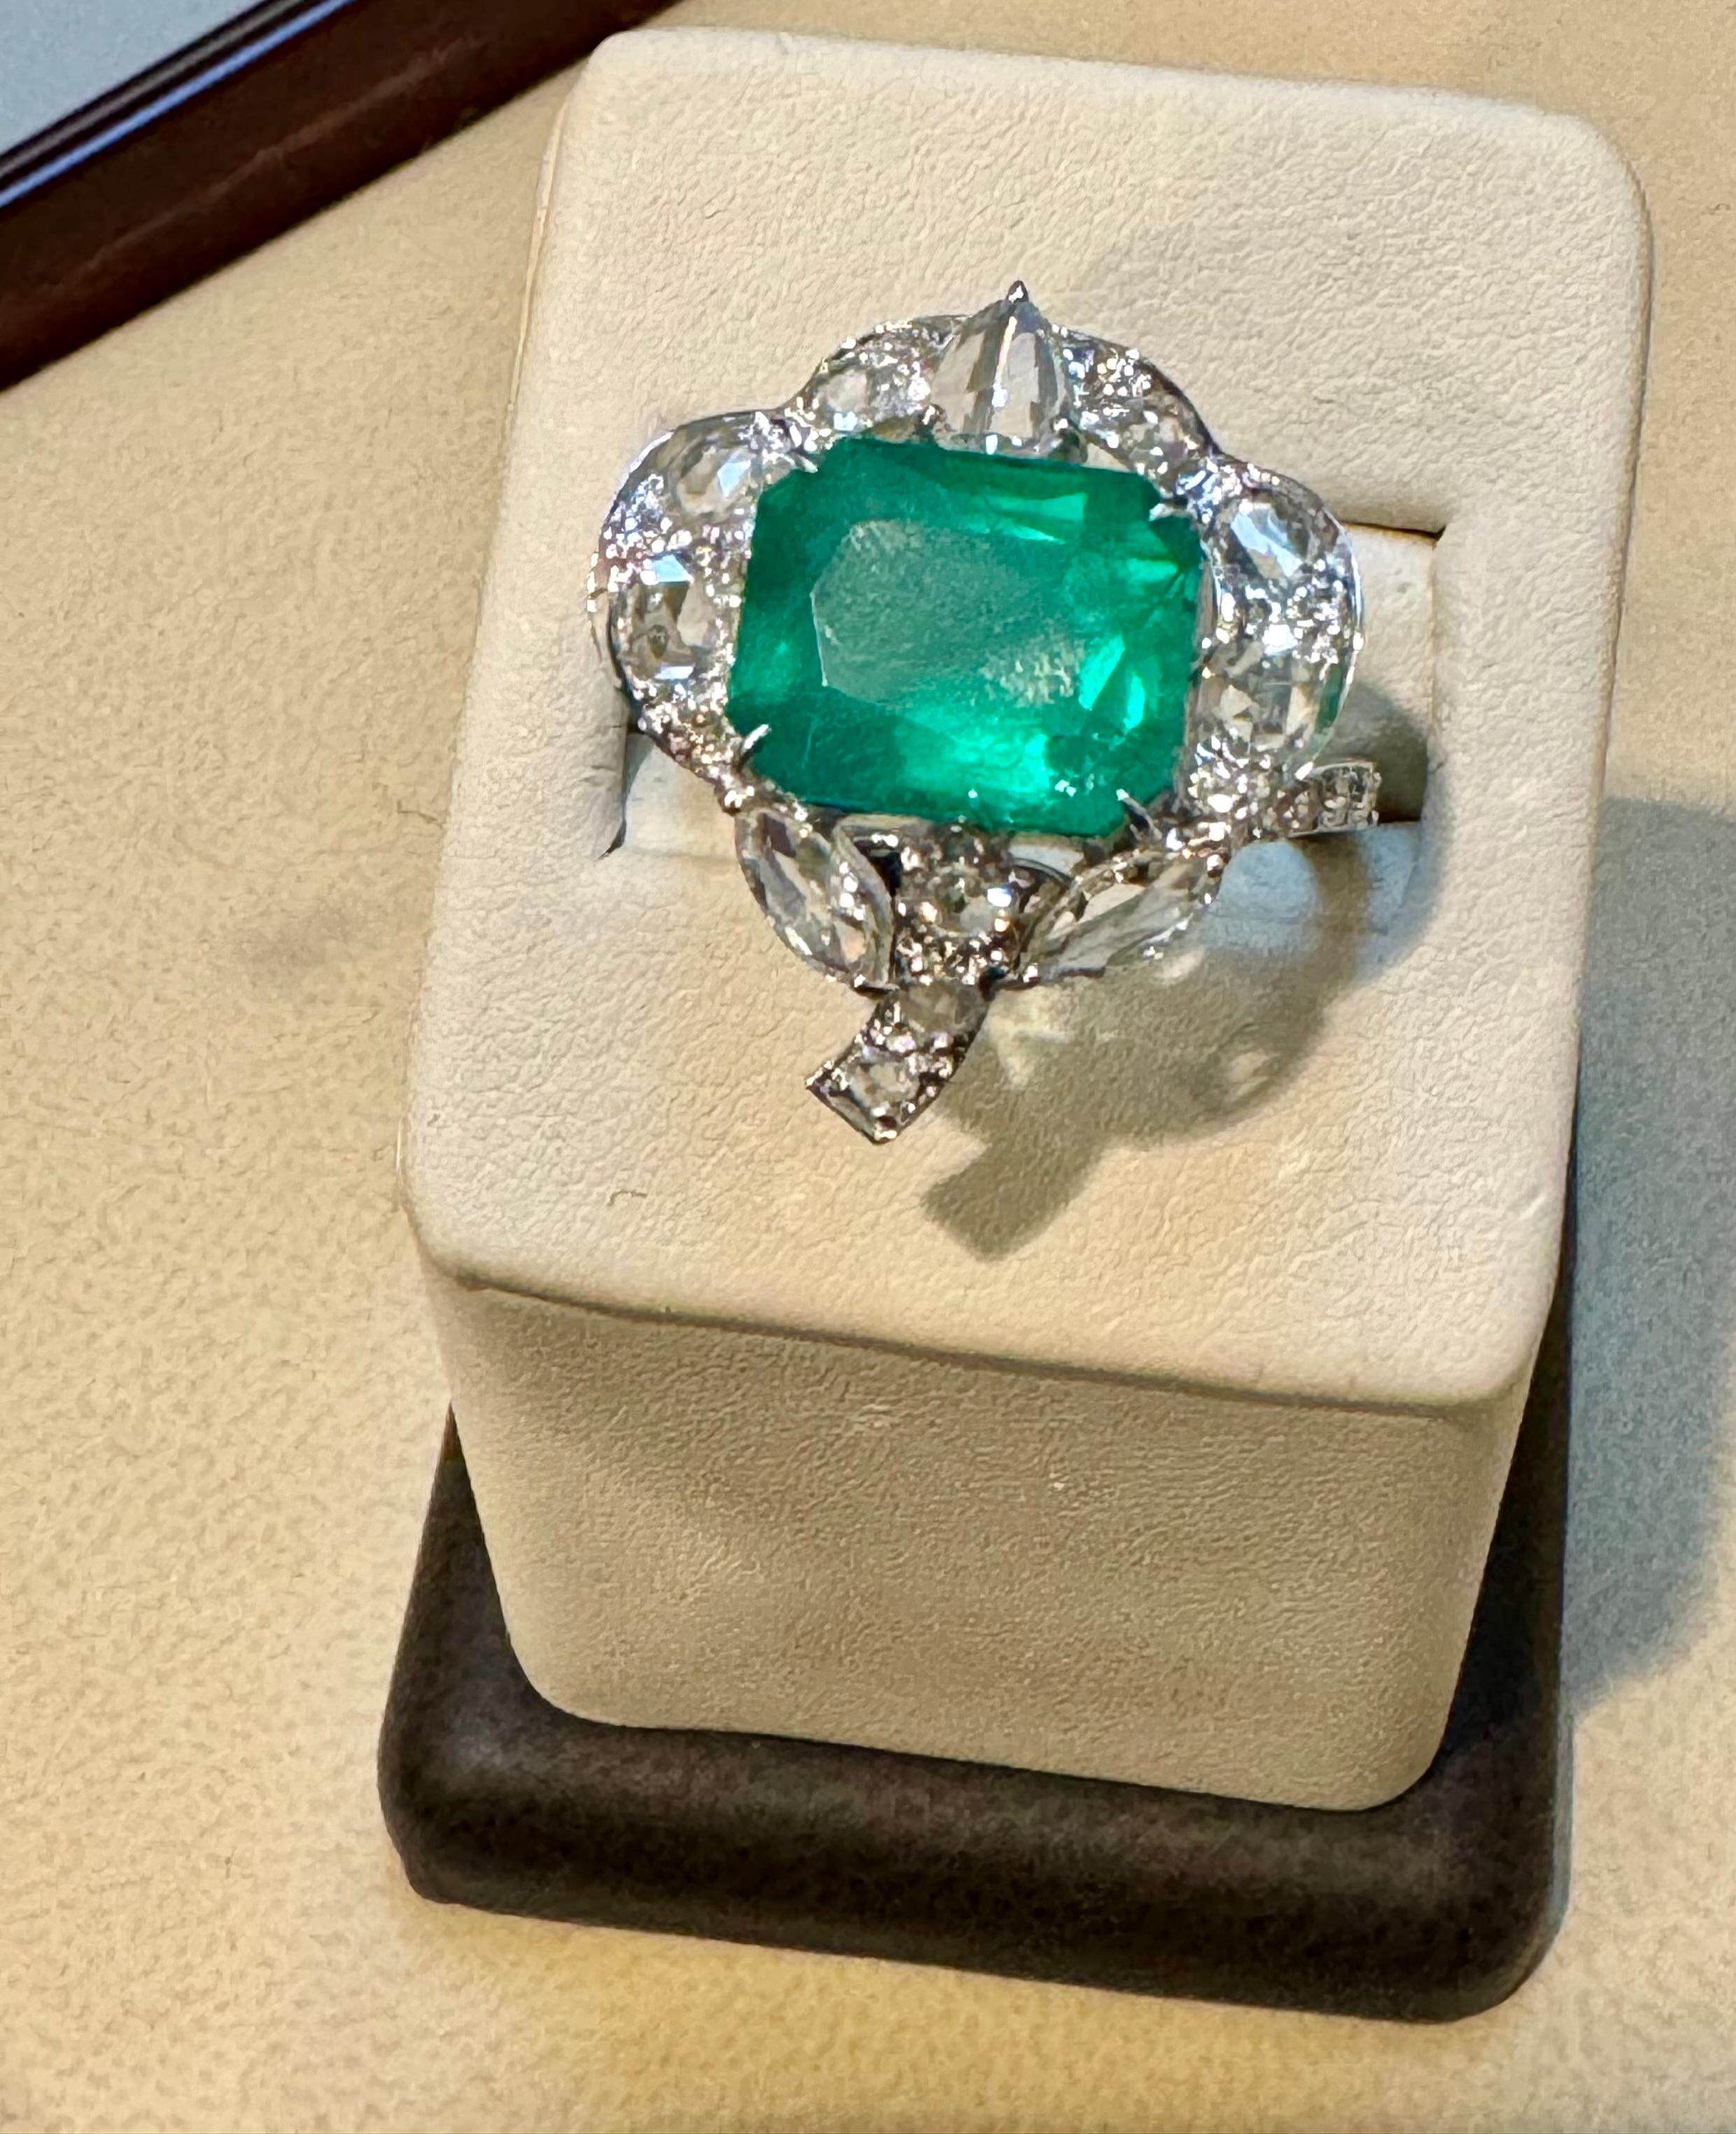 7 Ct Finest Zambian Emerald Cut Emerald & 1.5Ct Diamond Ring, 18 Kt Gold Size 9 For Sale 4